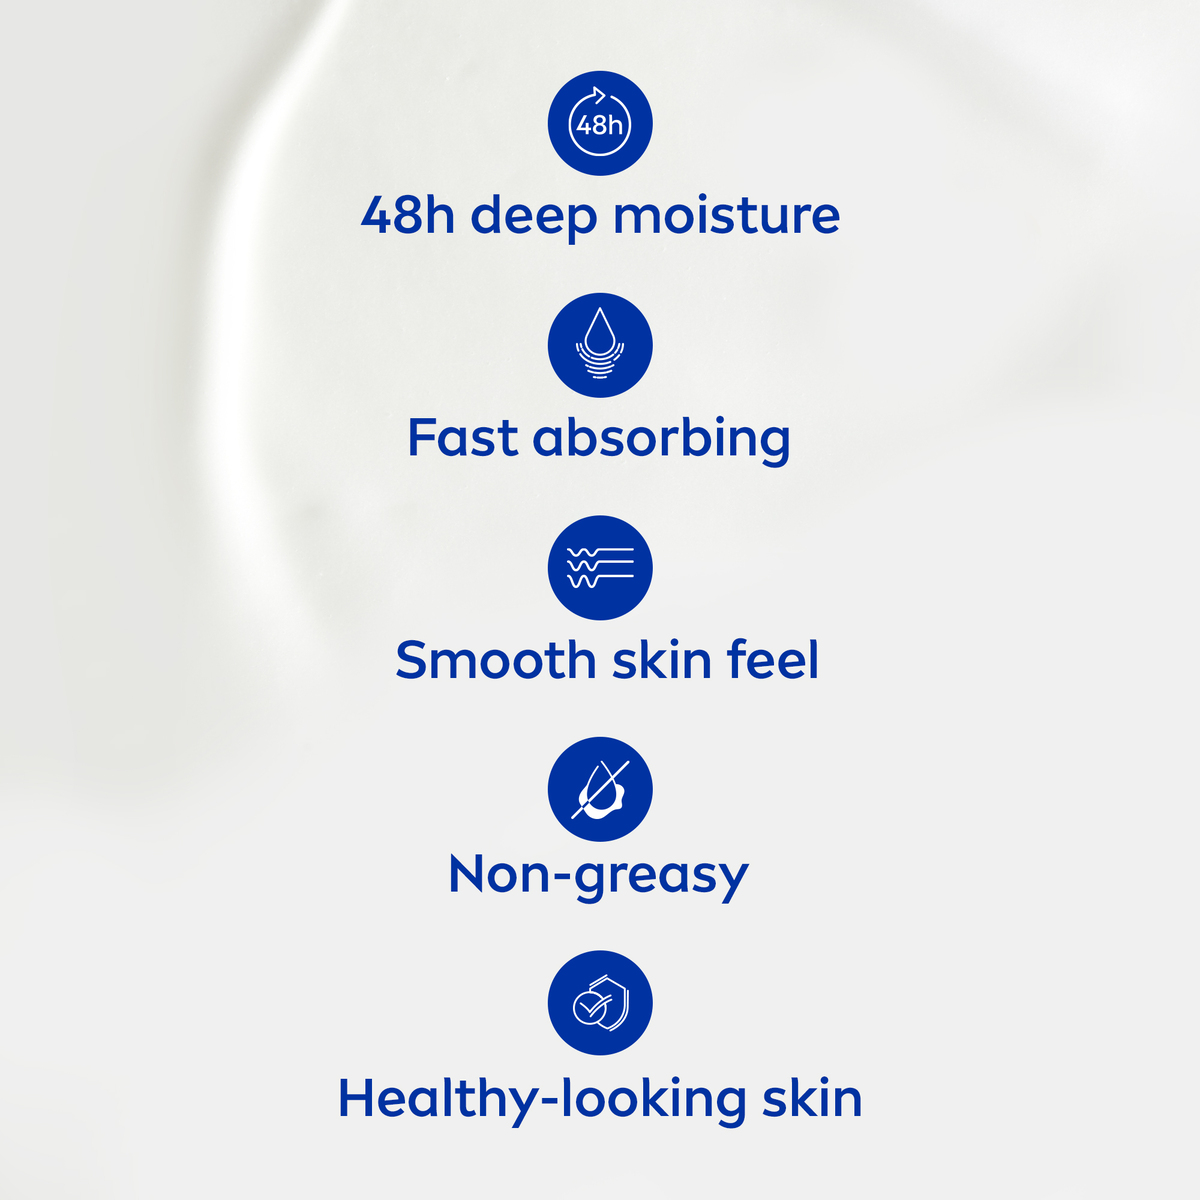 Nivea Body Lotion Express Hydration Normal & Dry Skin 400 ml